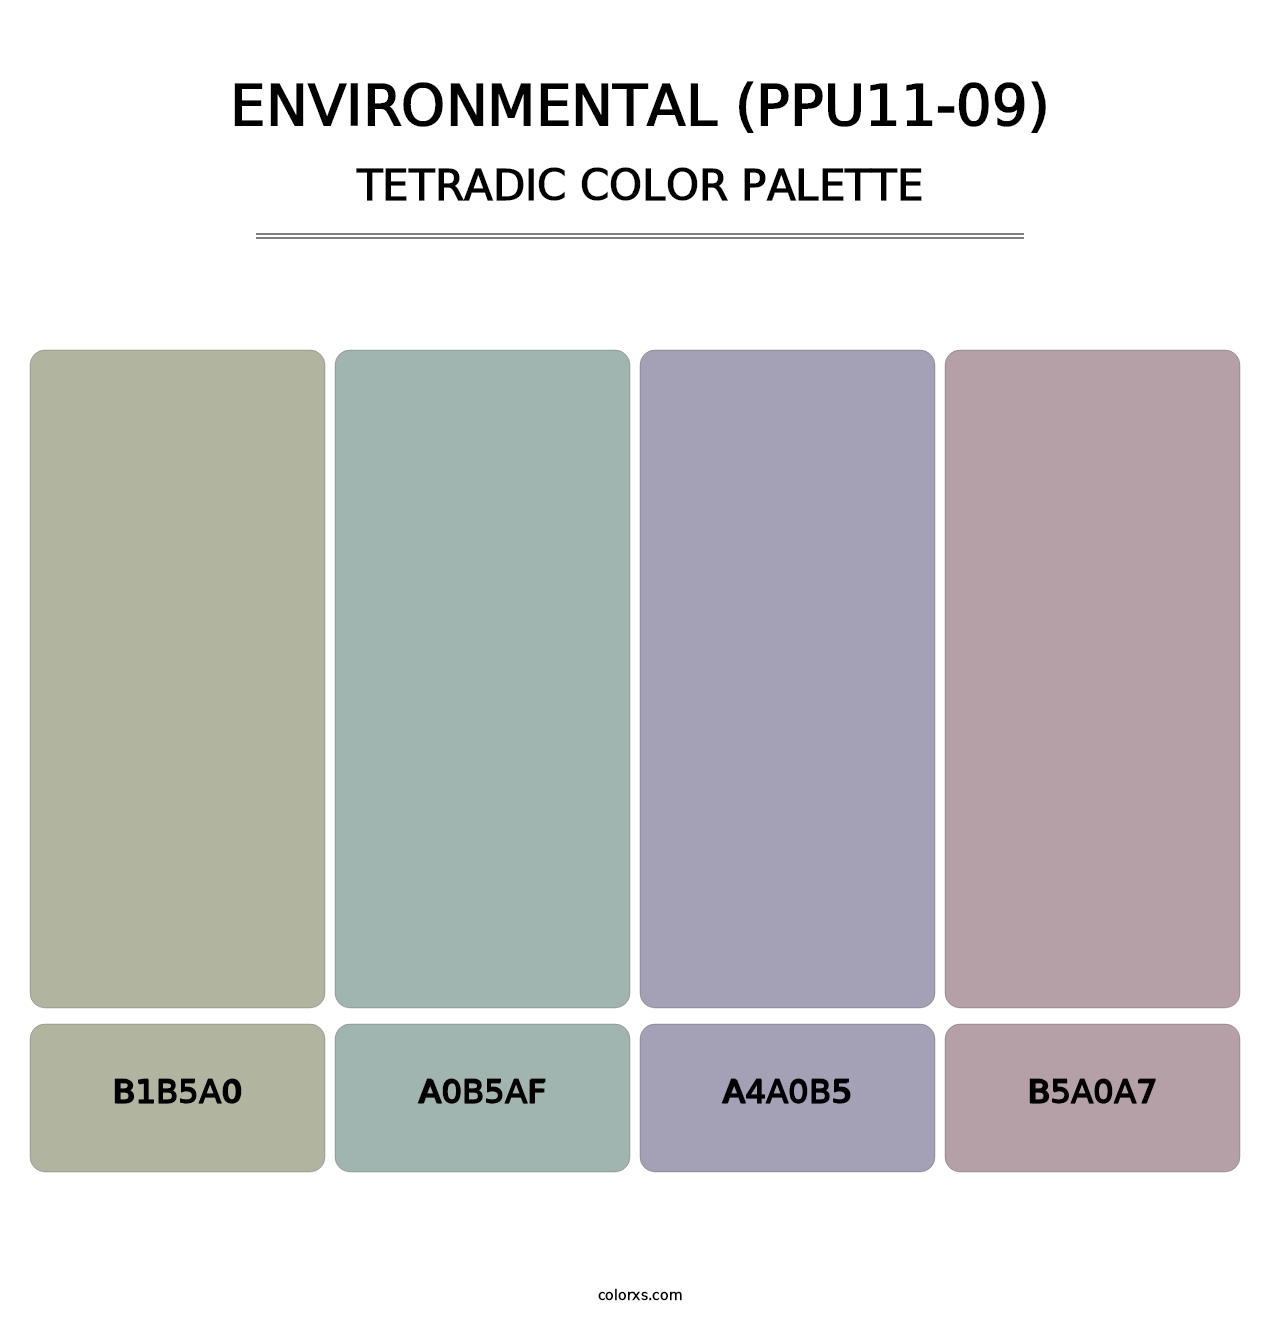 Environmental (PPU11-09) - Tetradic Color Palette